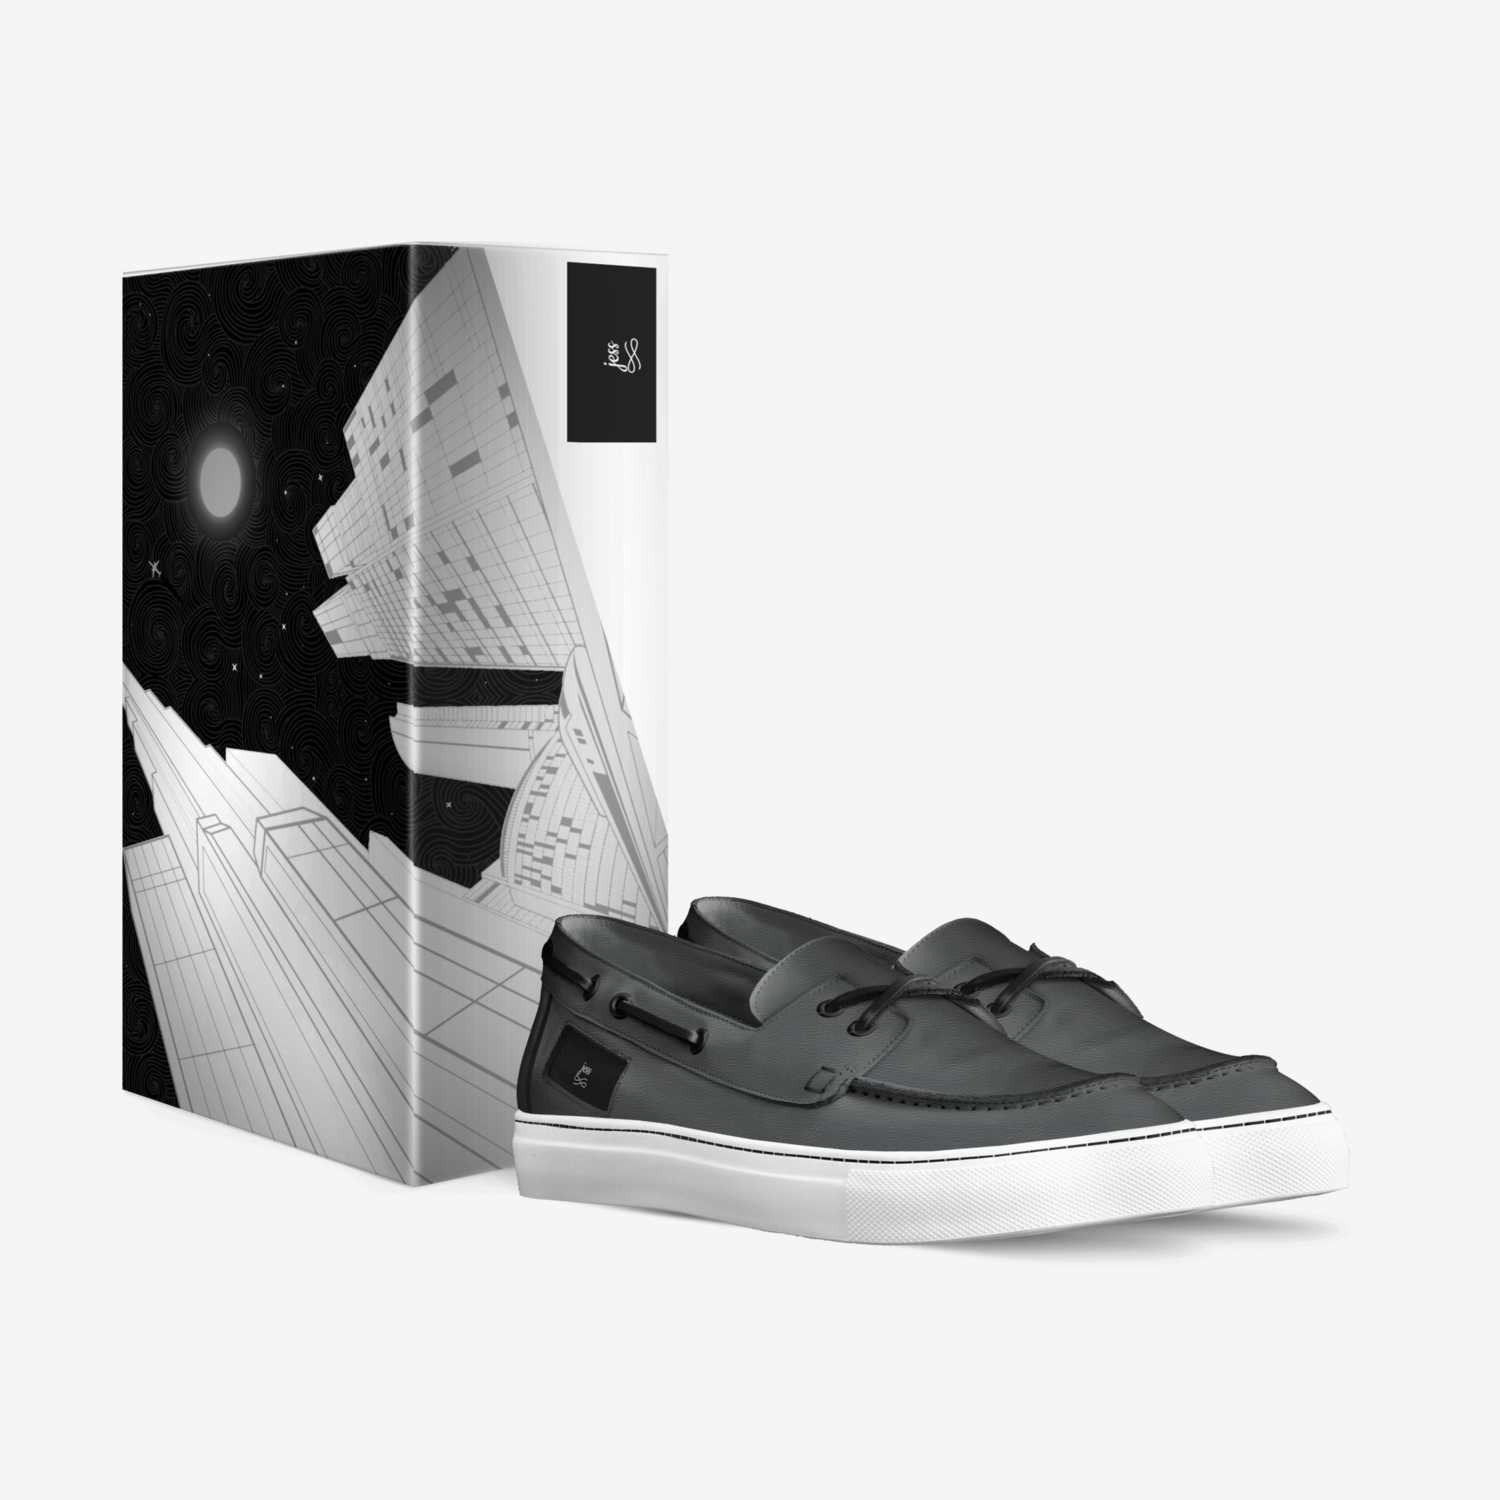 jess custom made in Italy shoes by Jessie Dewey | Box view